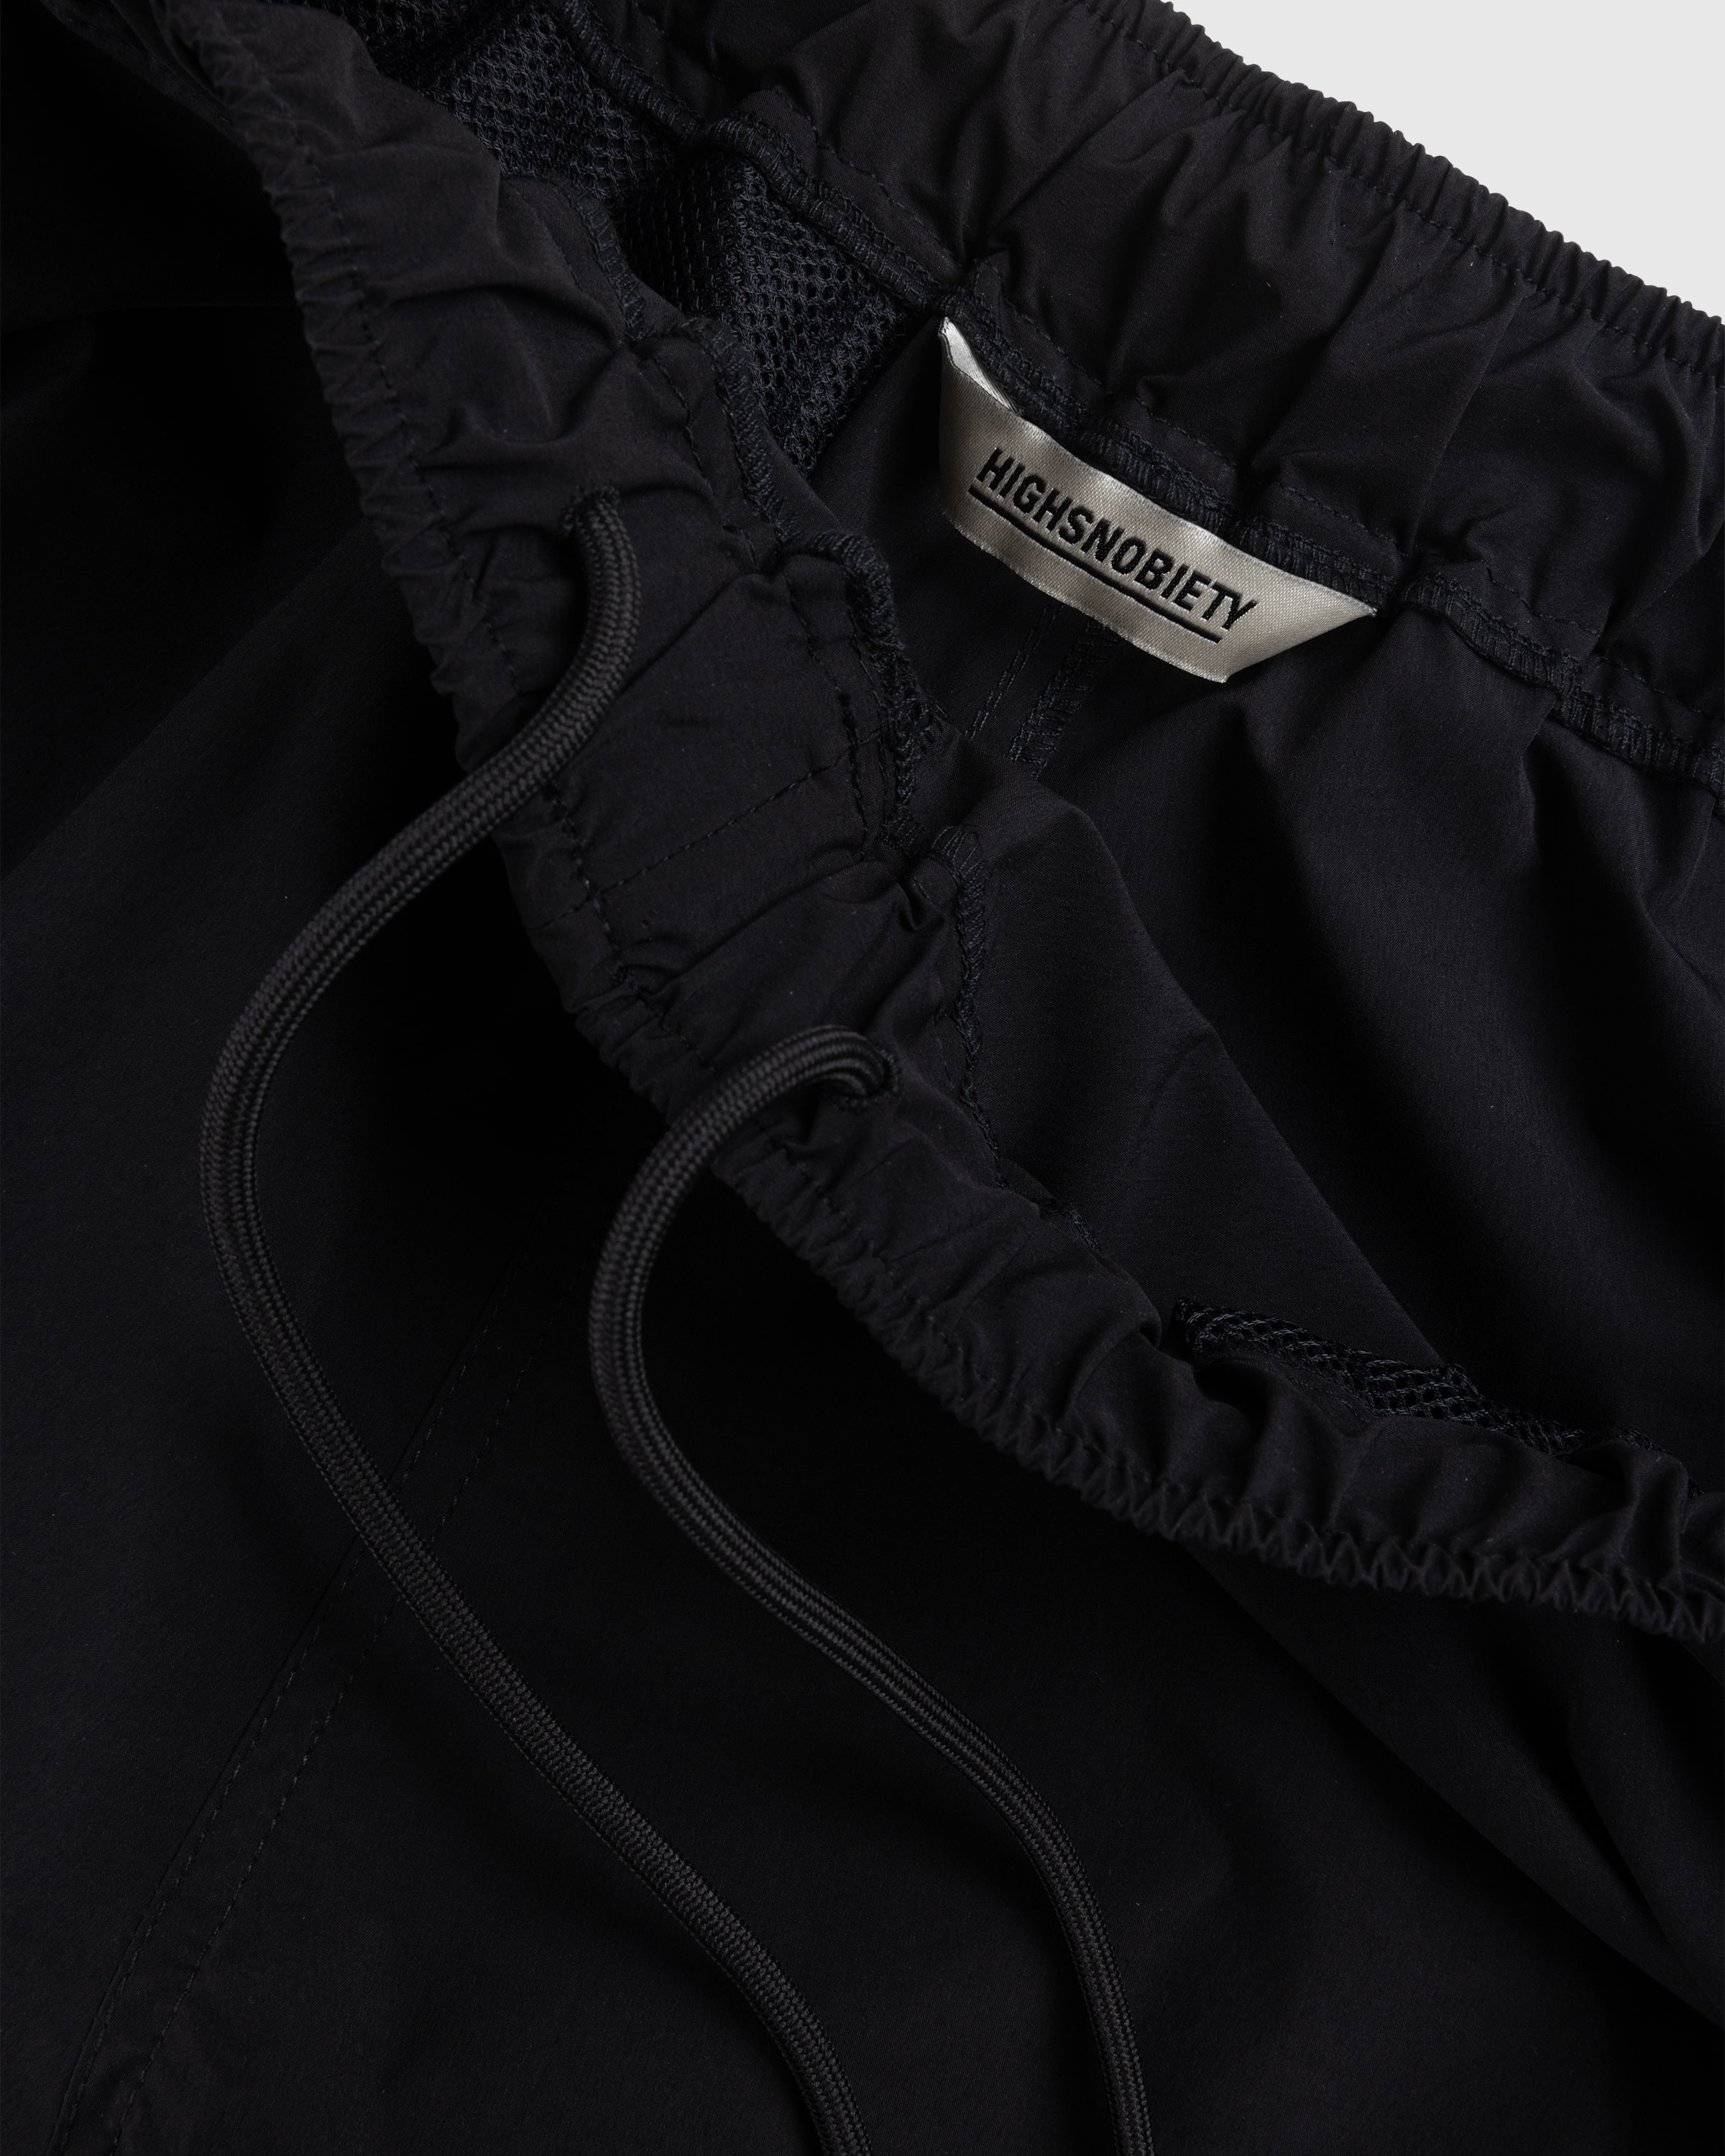 Highsnobiety – Not In Paris Nylon Shorts Black  - Bermuda Cuts - Black - Image 7